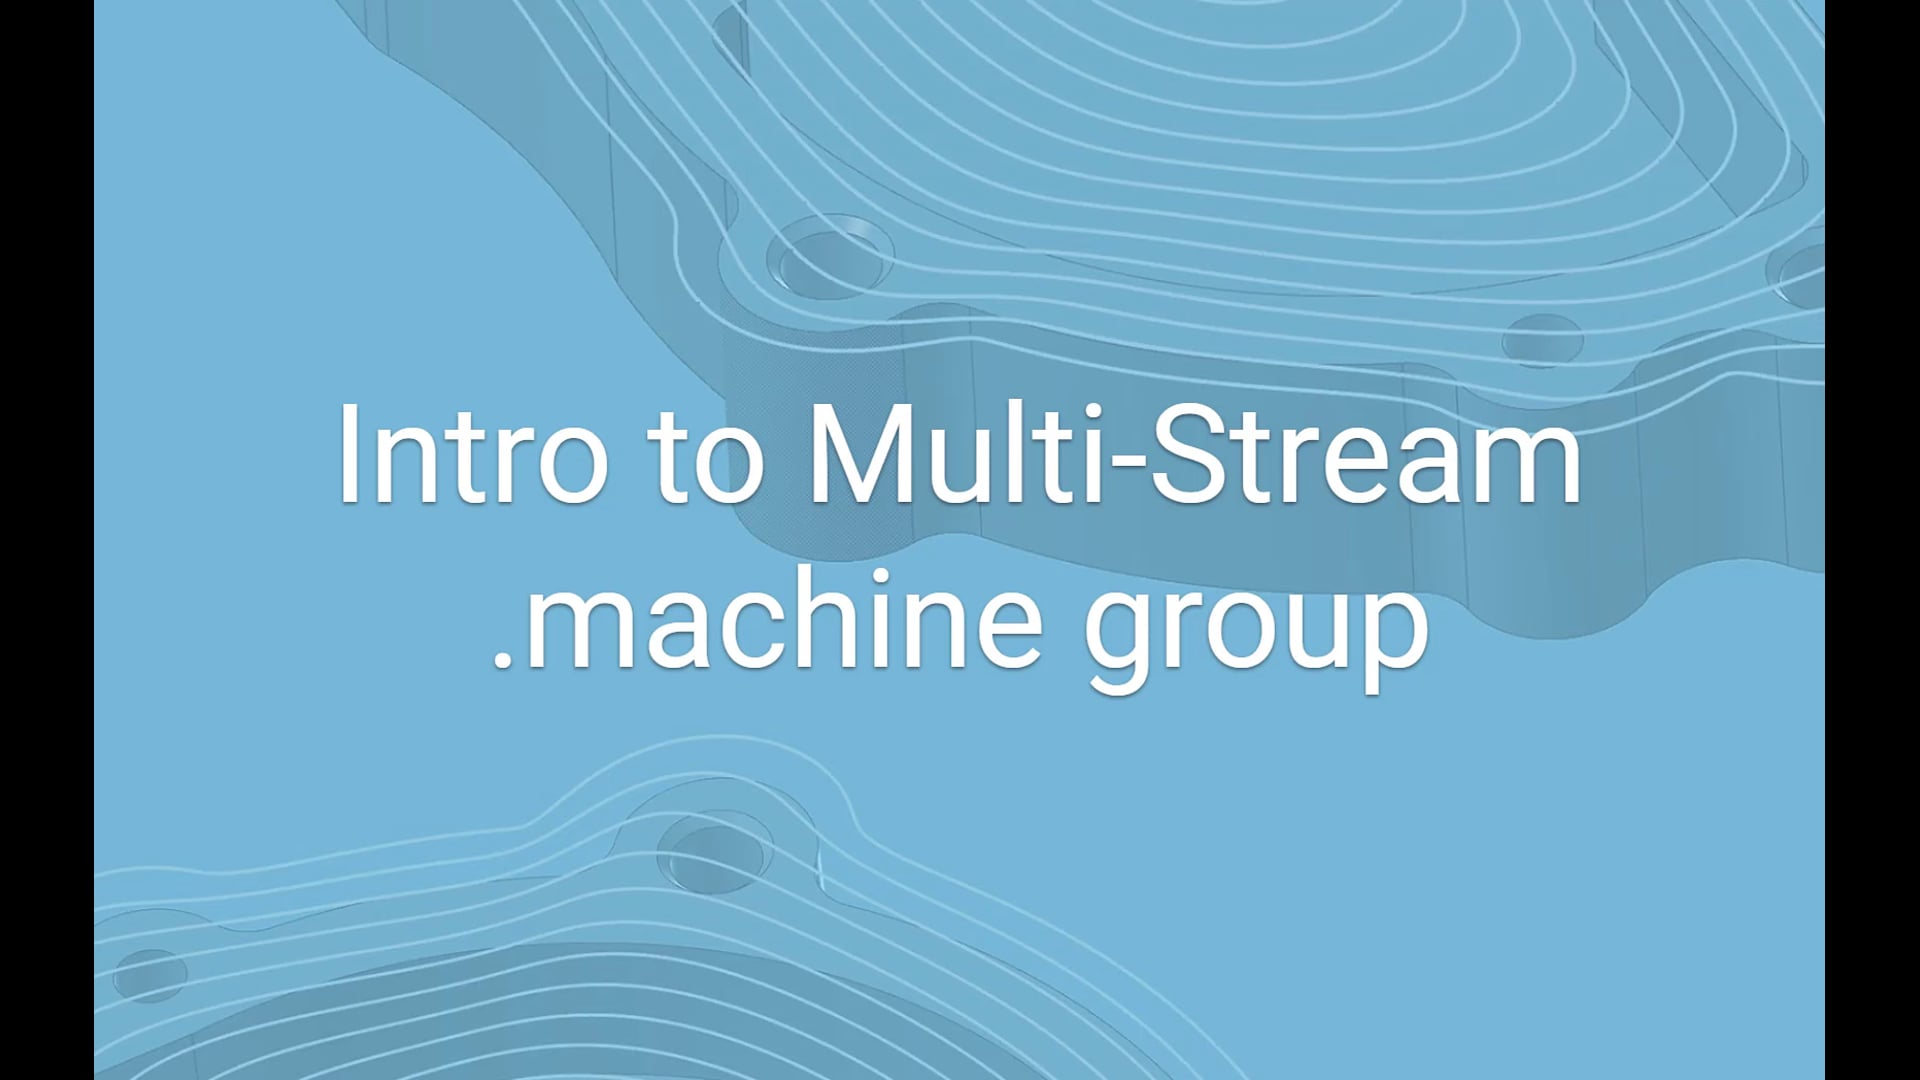 Multi-Stream Mill-Turn